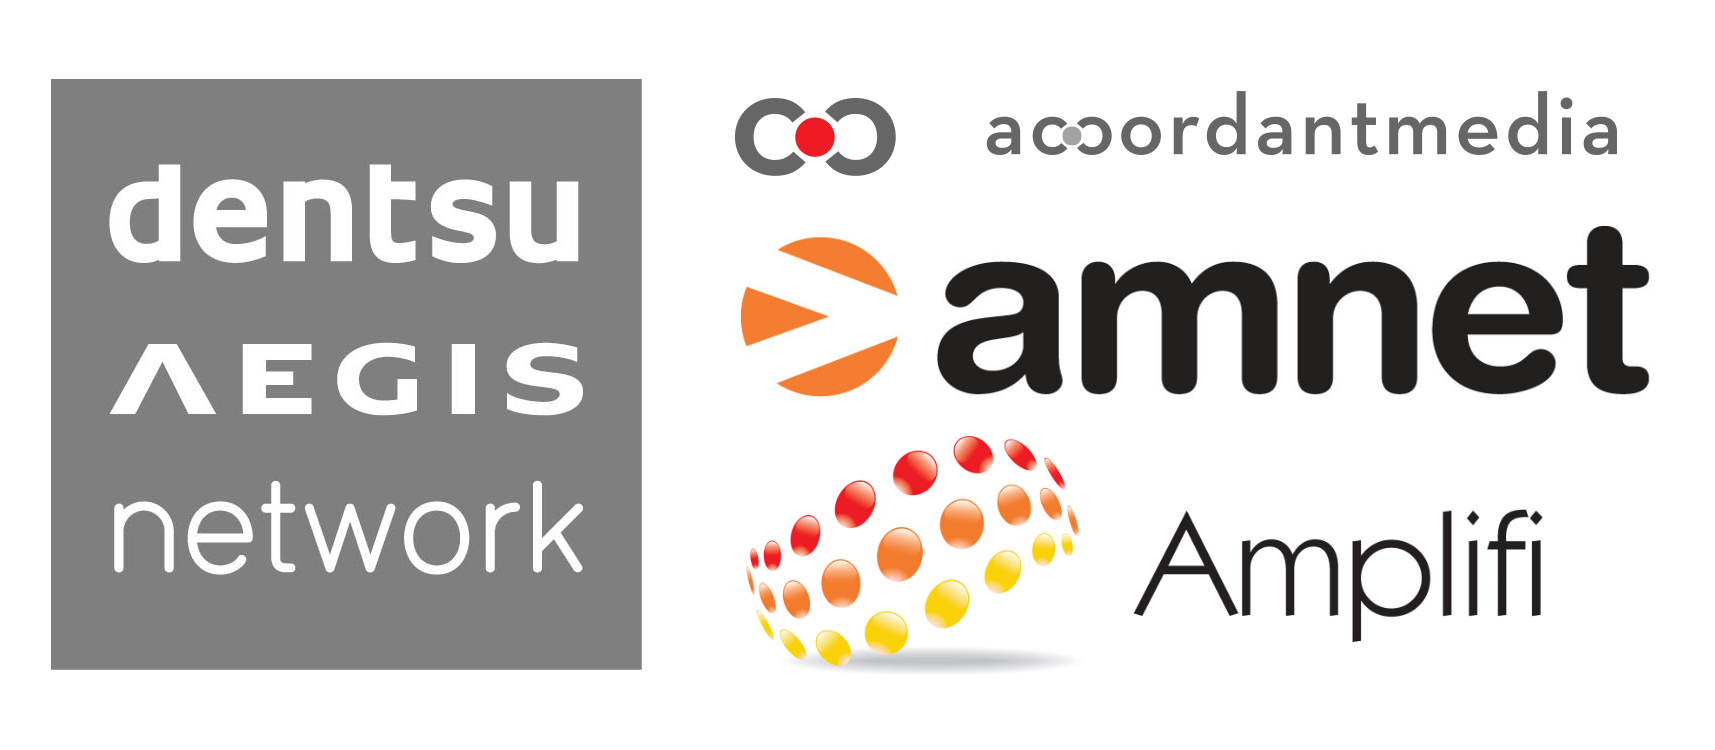 Amnet Logo - Dentsu Aegis Acquires Programmatic Ad Tech Firm Accordant | Mobile ...